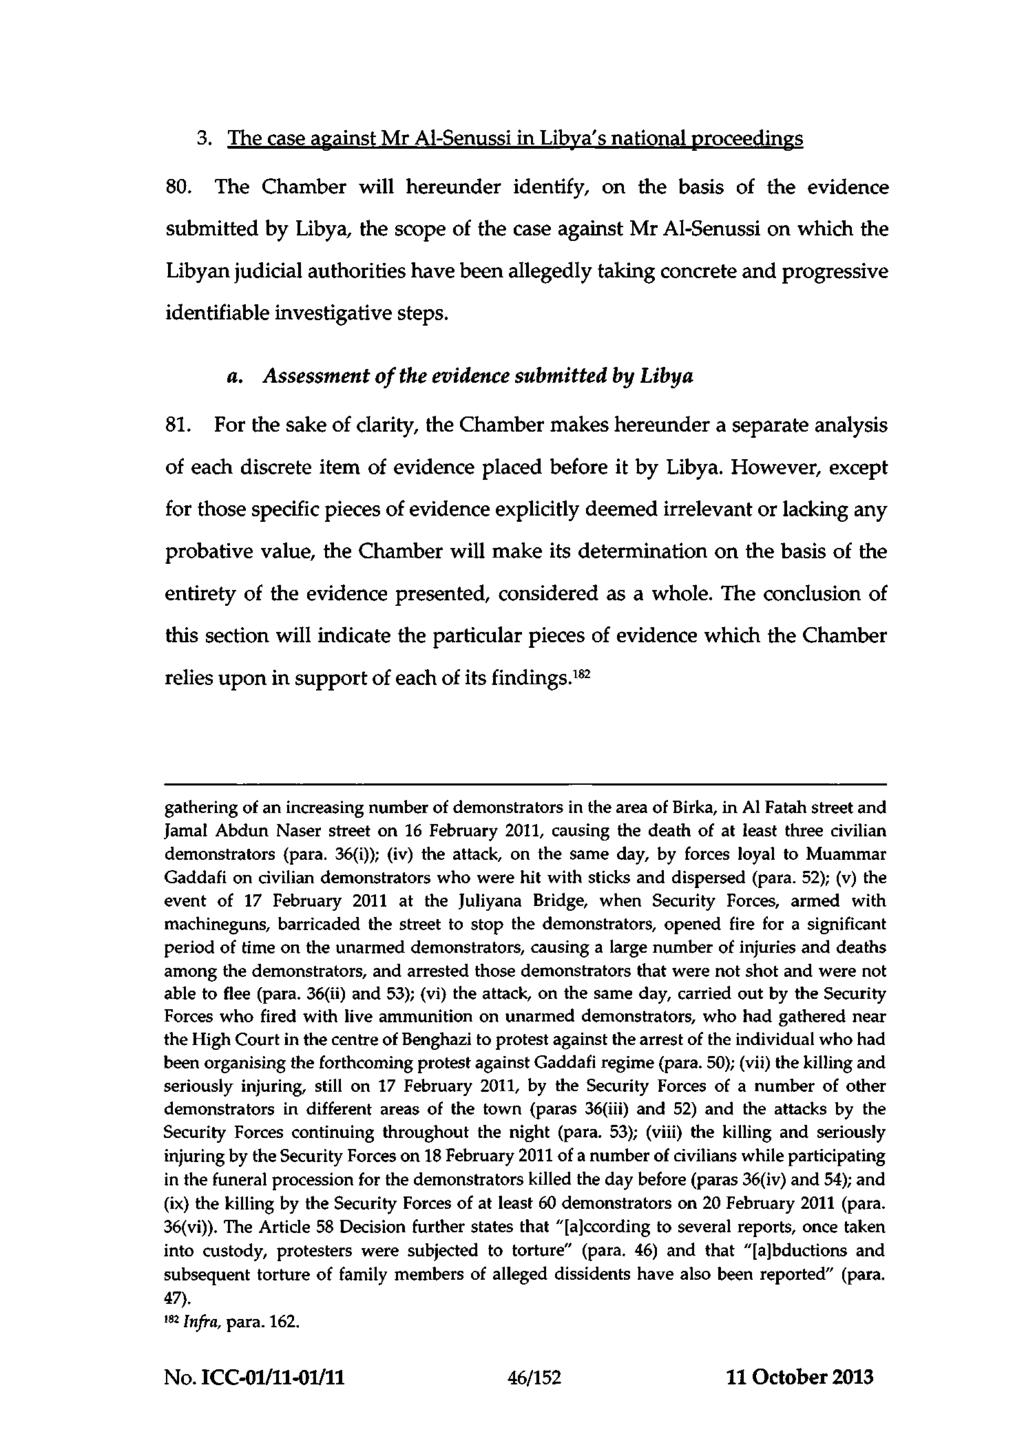 ICC-01/11-01/11-466-Red 11-10-2013 46/152 NM PT 3. The case against Mr Al-Senussi in Libya's national proceedings 80.